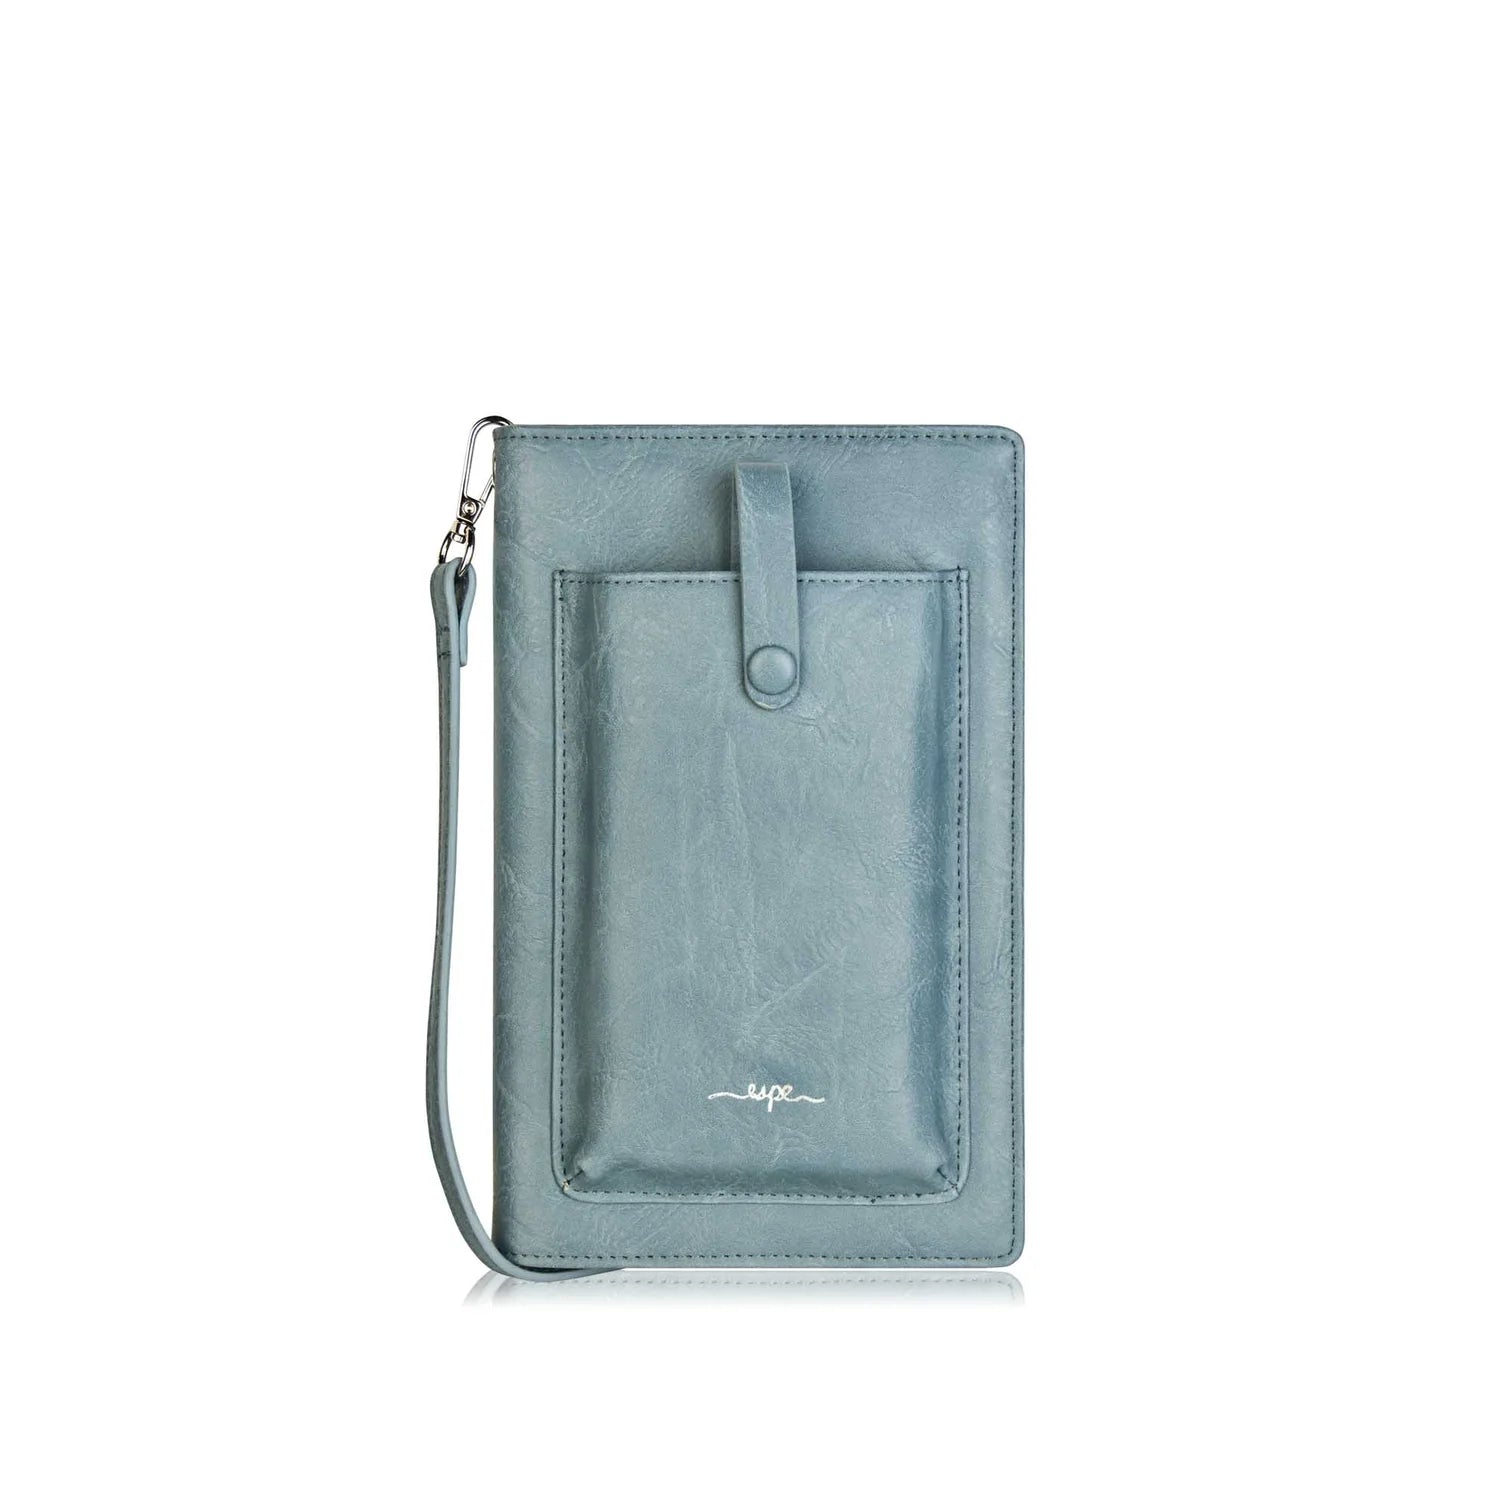 Espe - ISmart Pocket Bag